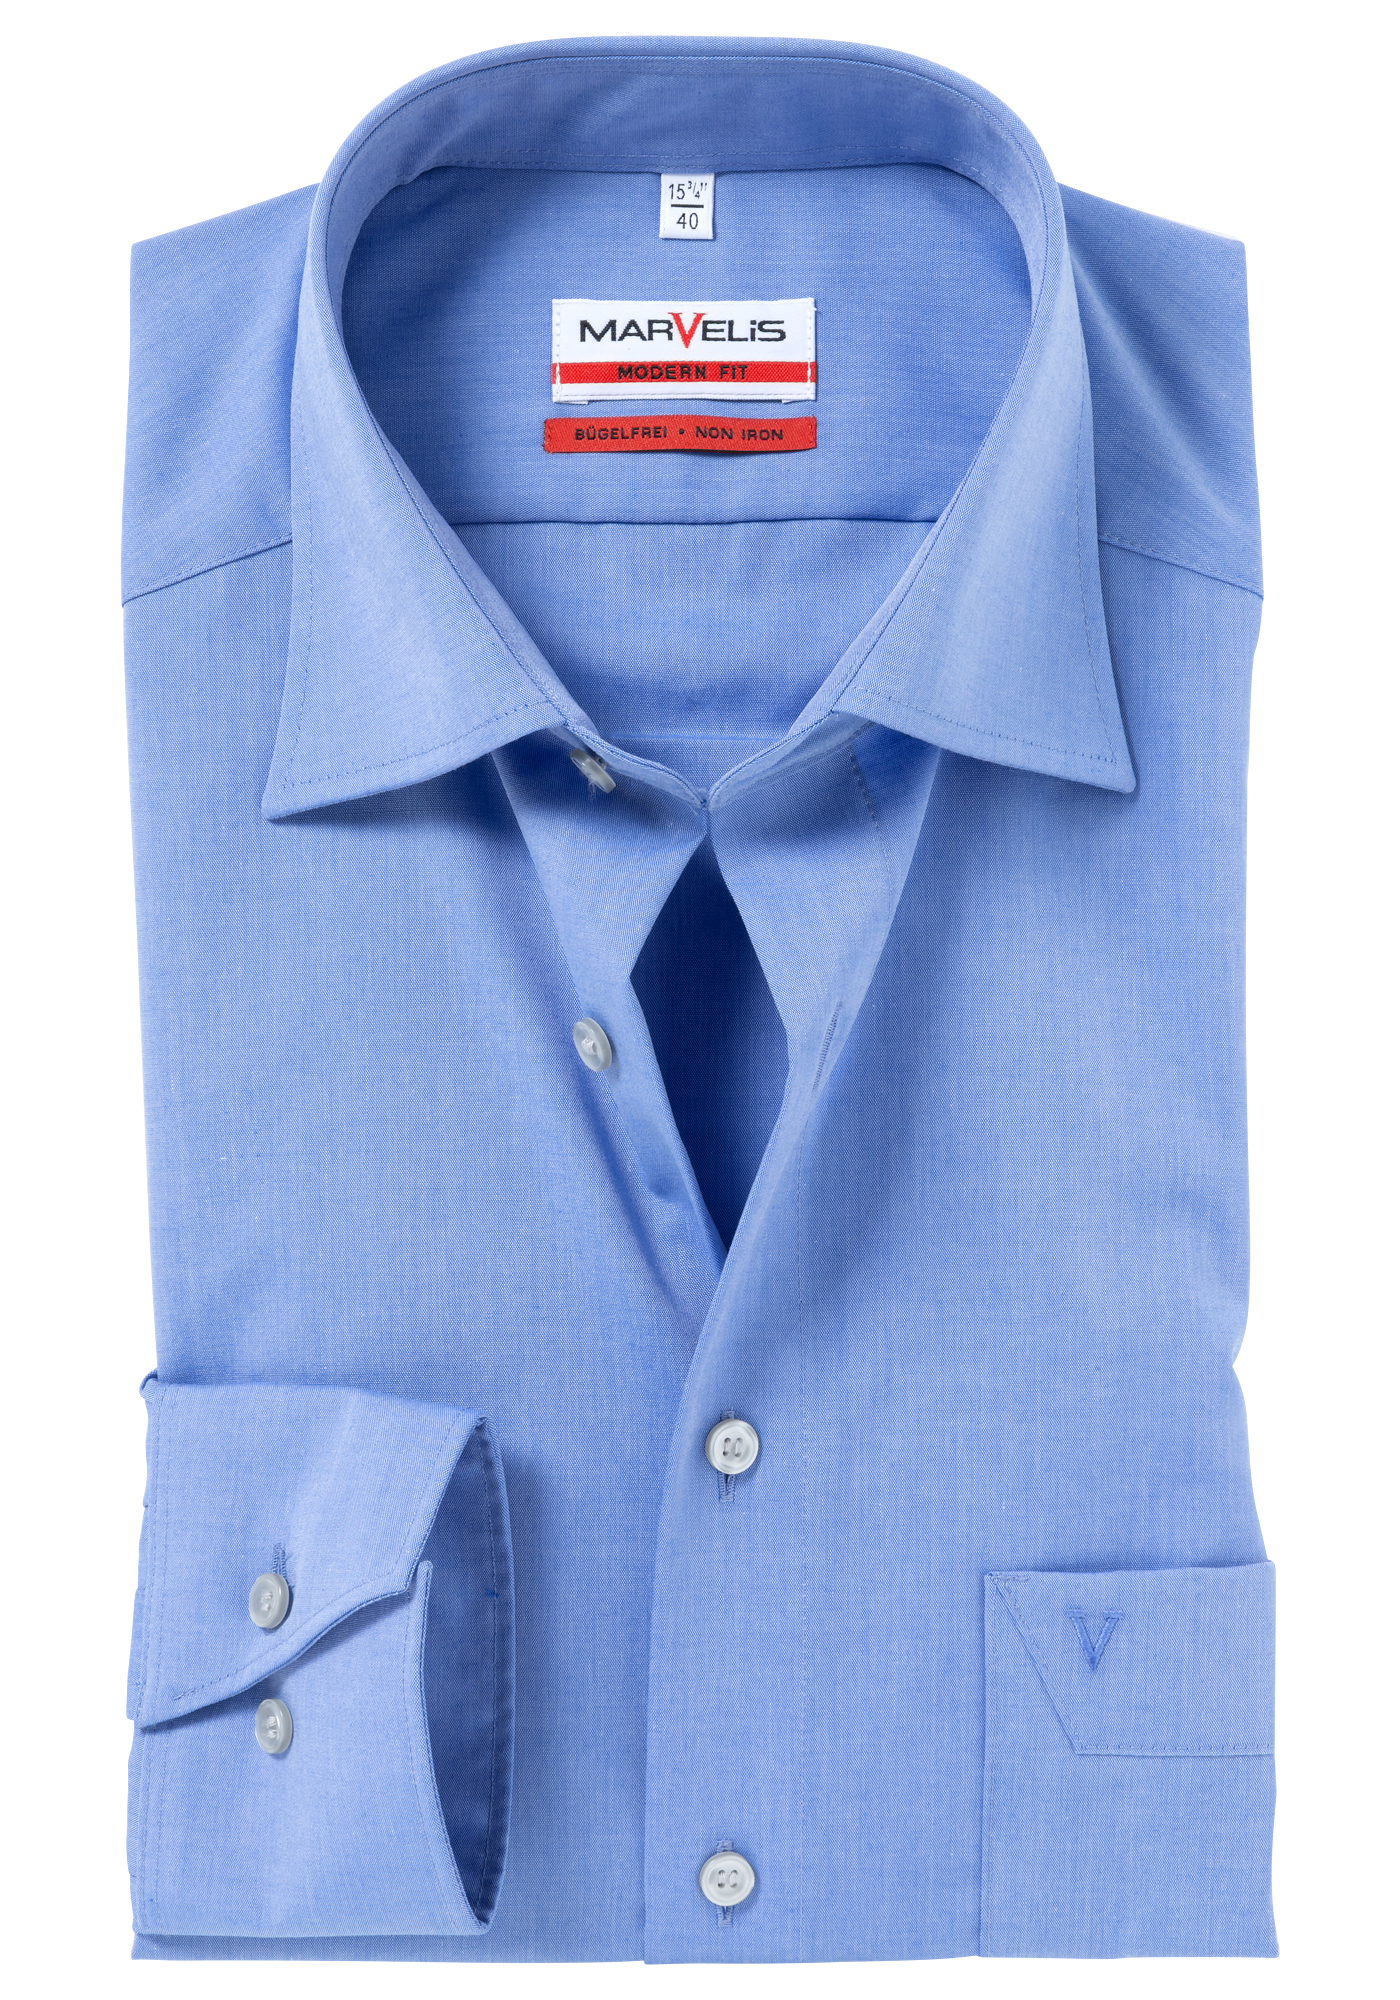 MARVELIS modern fit overhemd, middel blauw